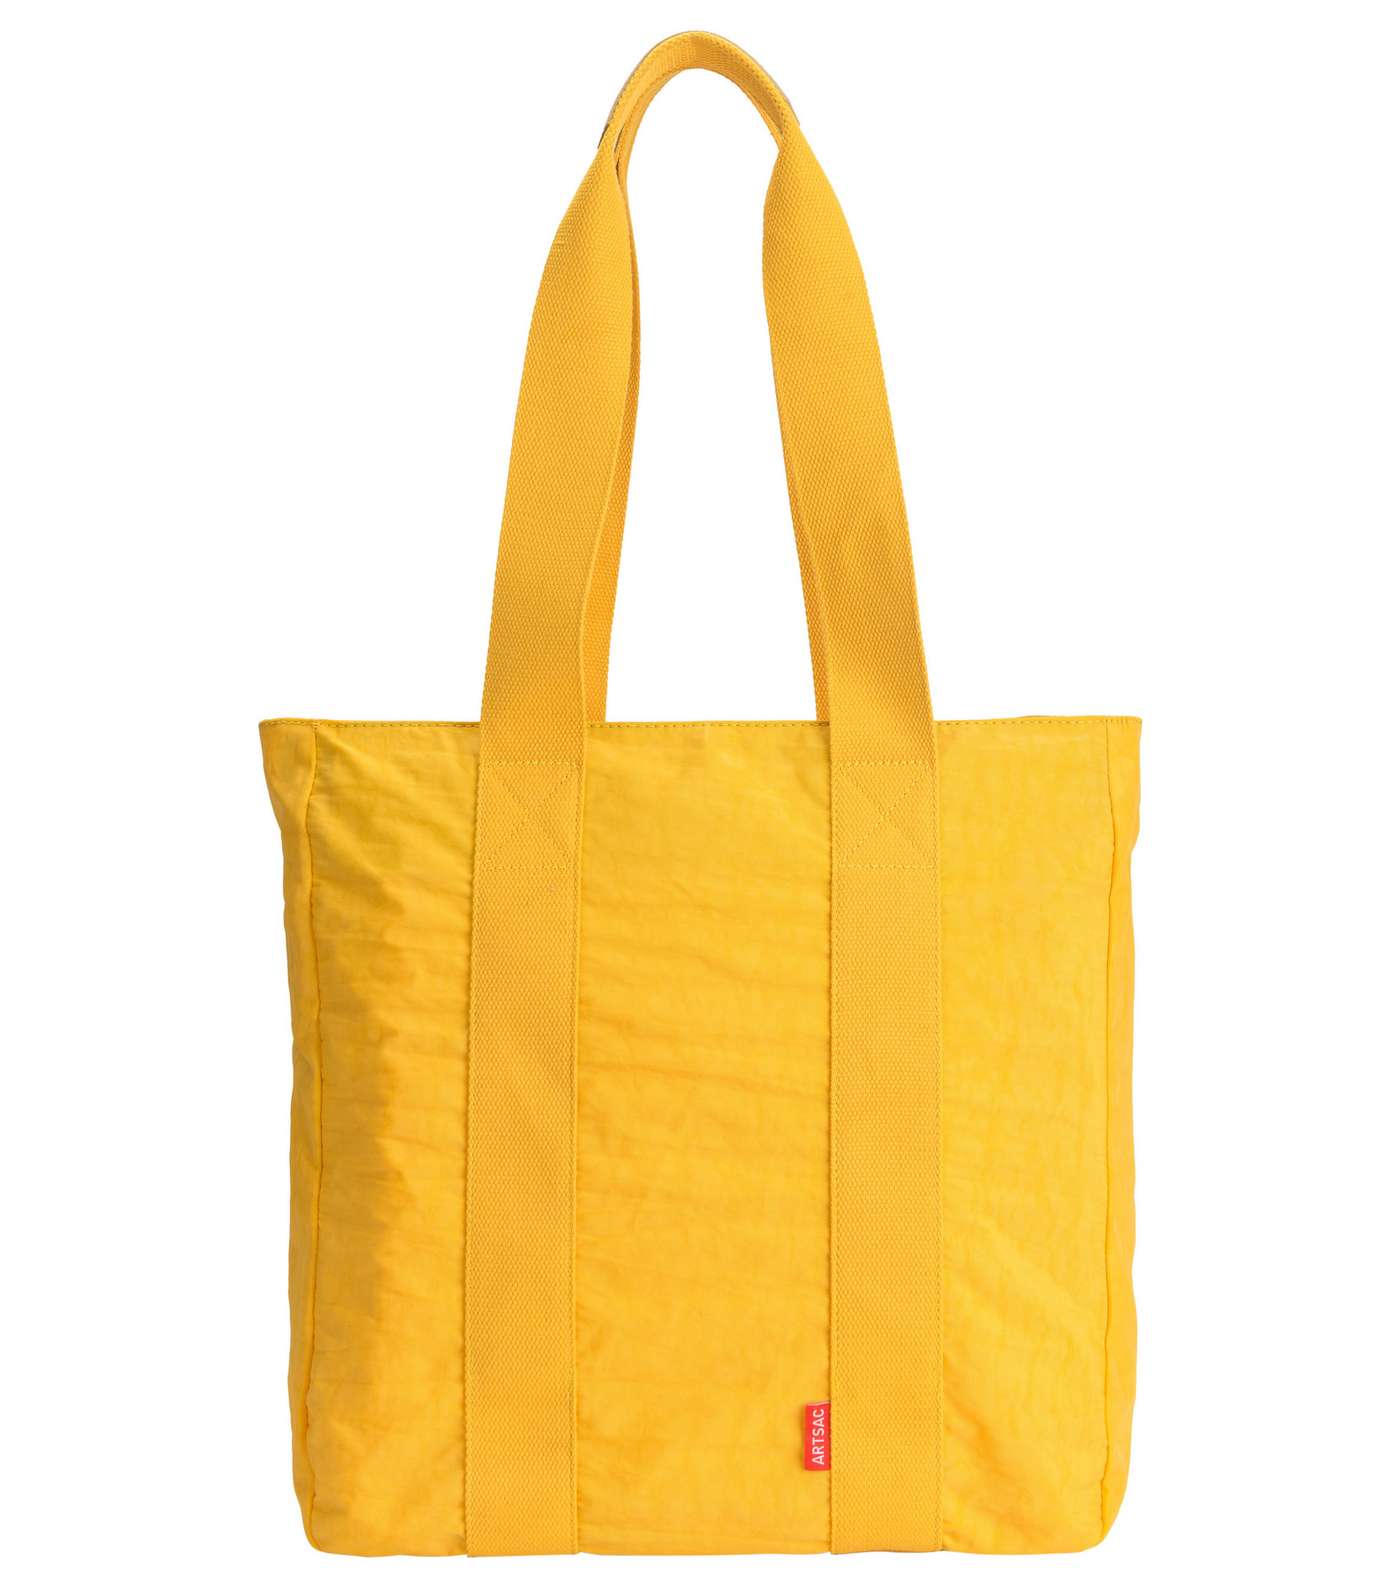 Artsac Yellow Double Strap Tote Bag Image 3